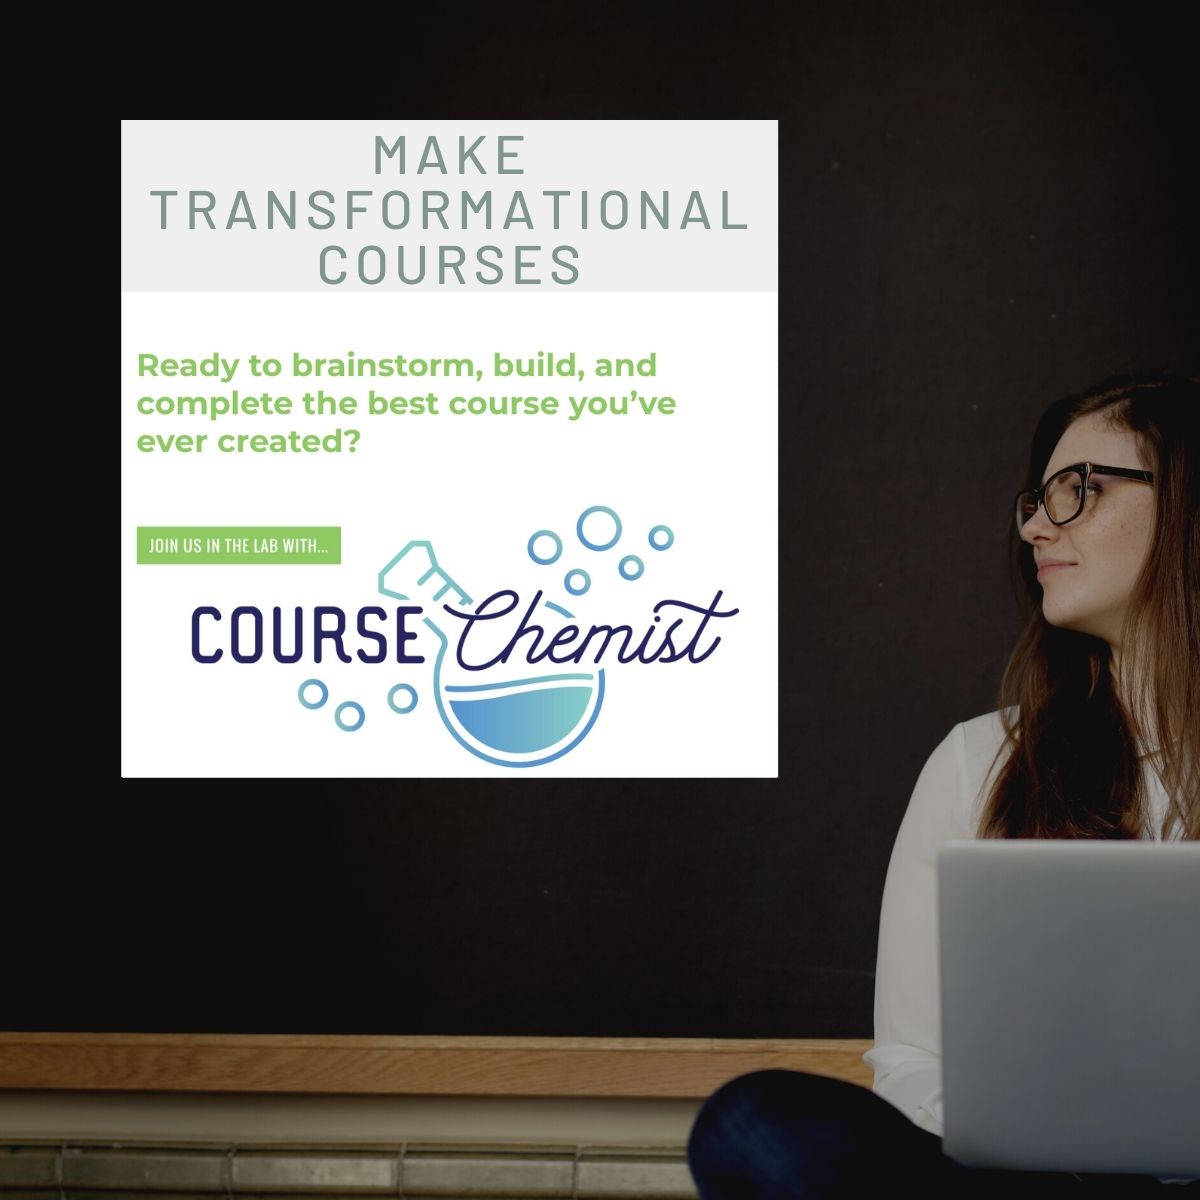 Course Chemist - Make Transformational Courses